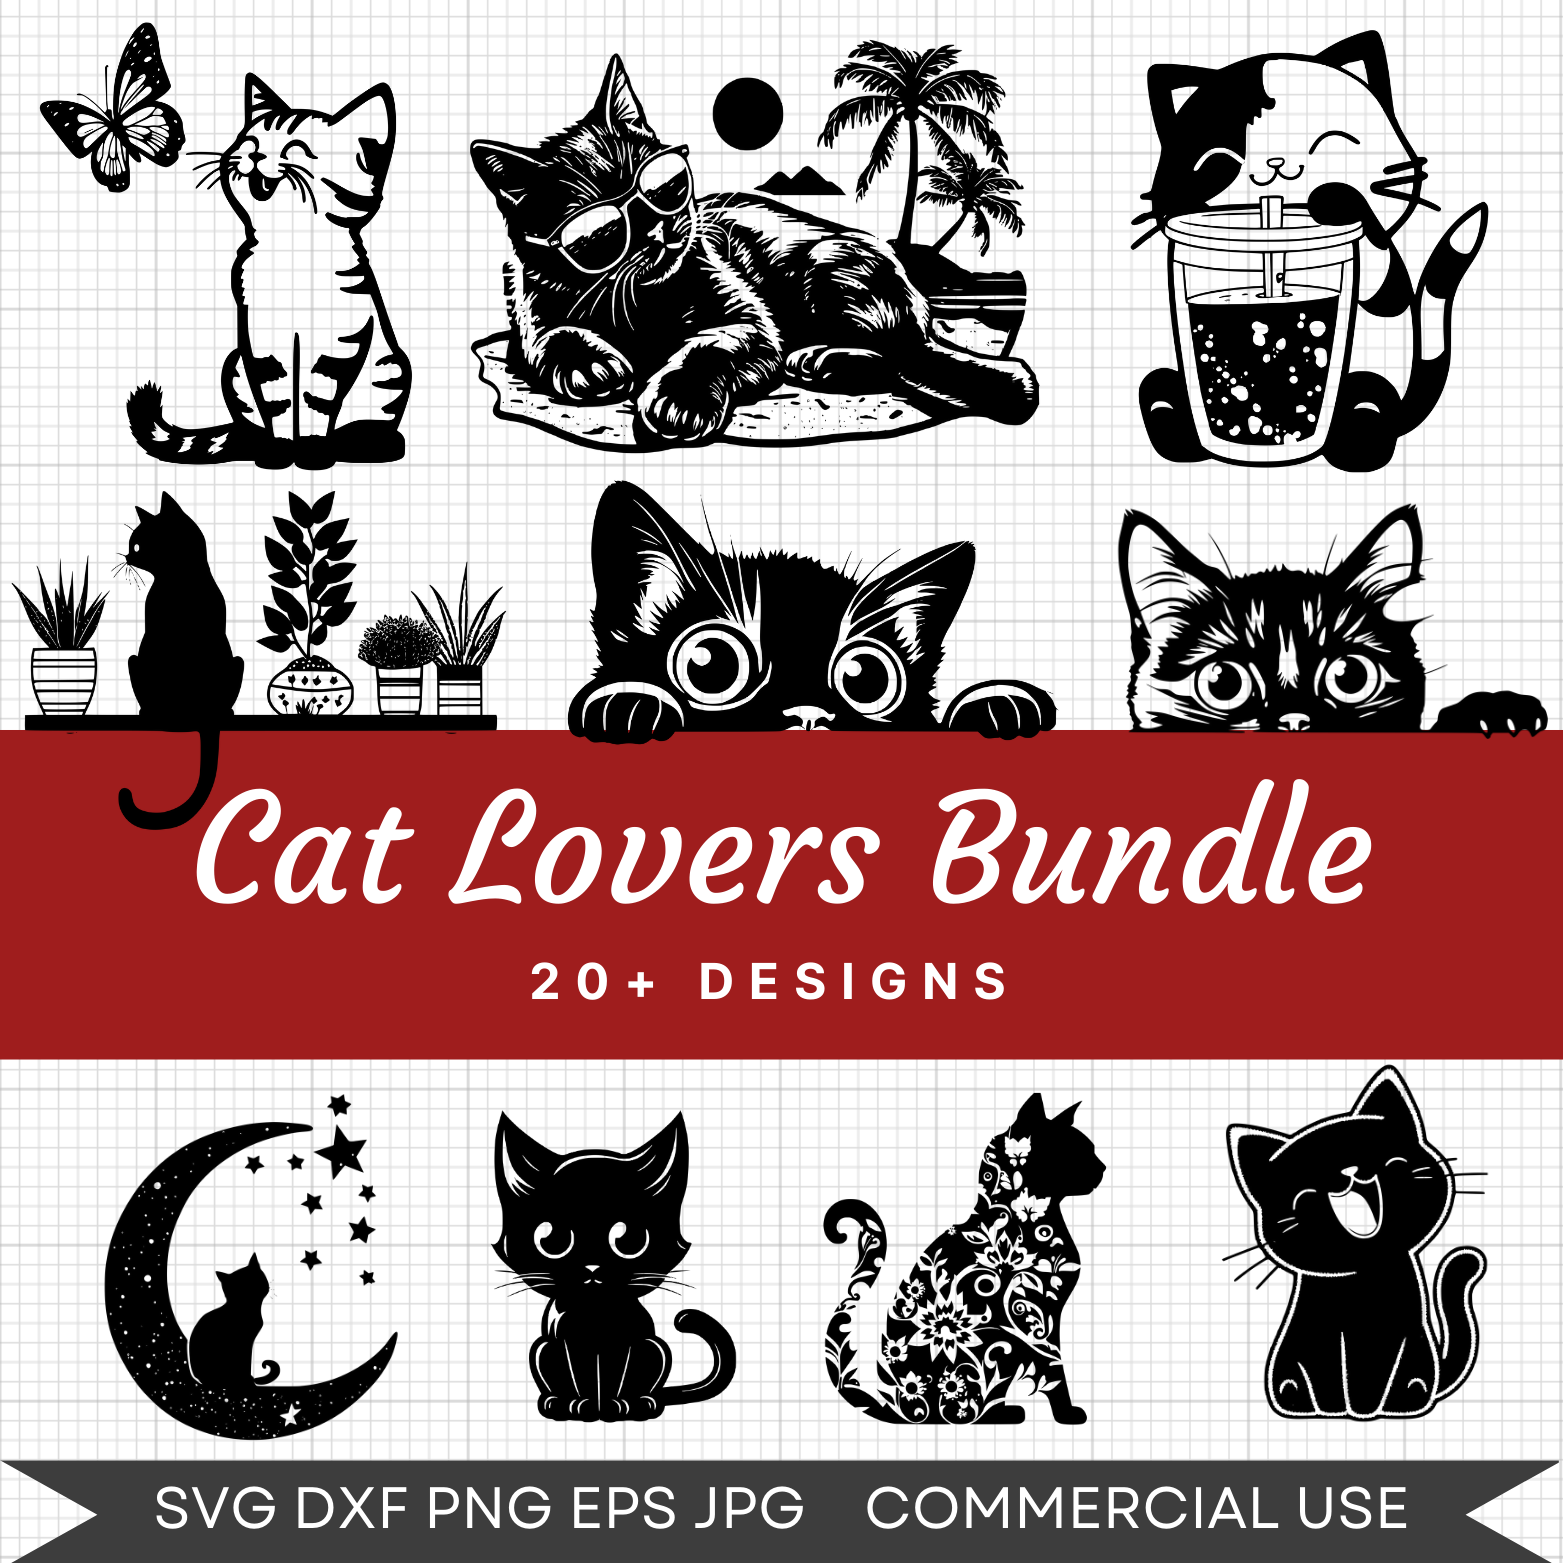 https://creativemeadow.com/wp-content/uploads/2023/02/Cat-Lovers-Bundle-1.png